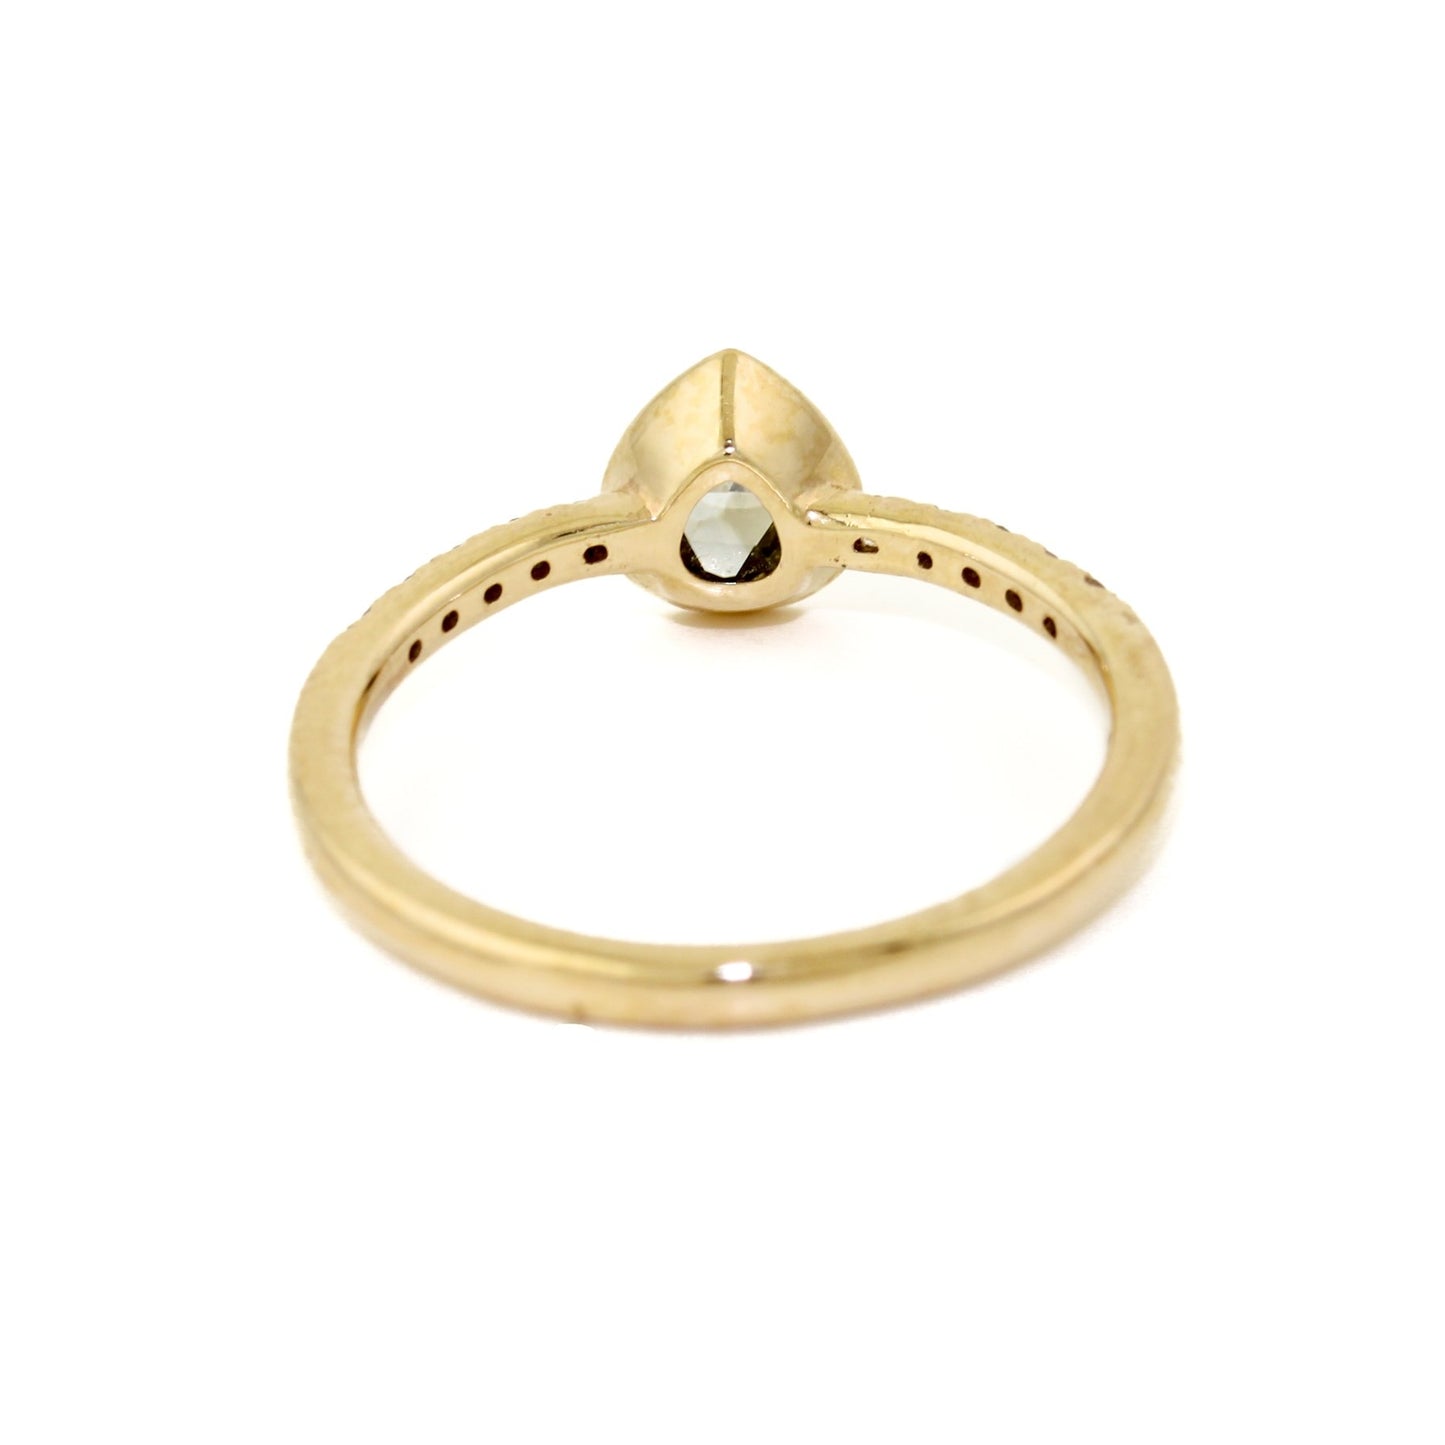 Rose Cut Diamond Ring with Pave - Kingdom Jewelry